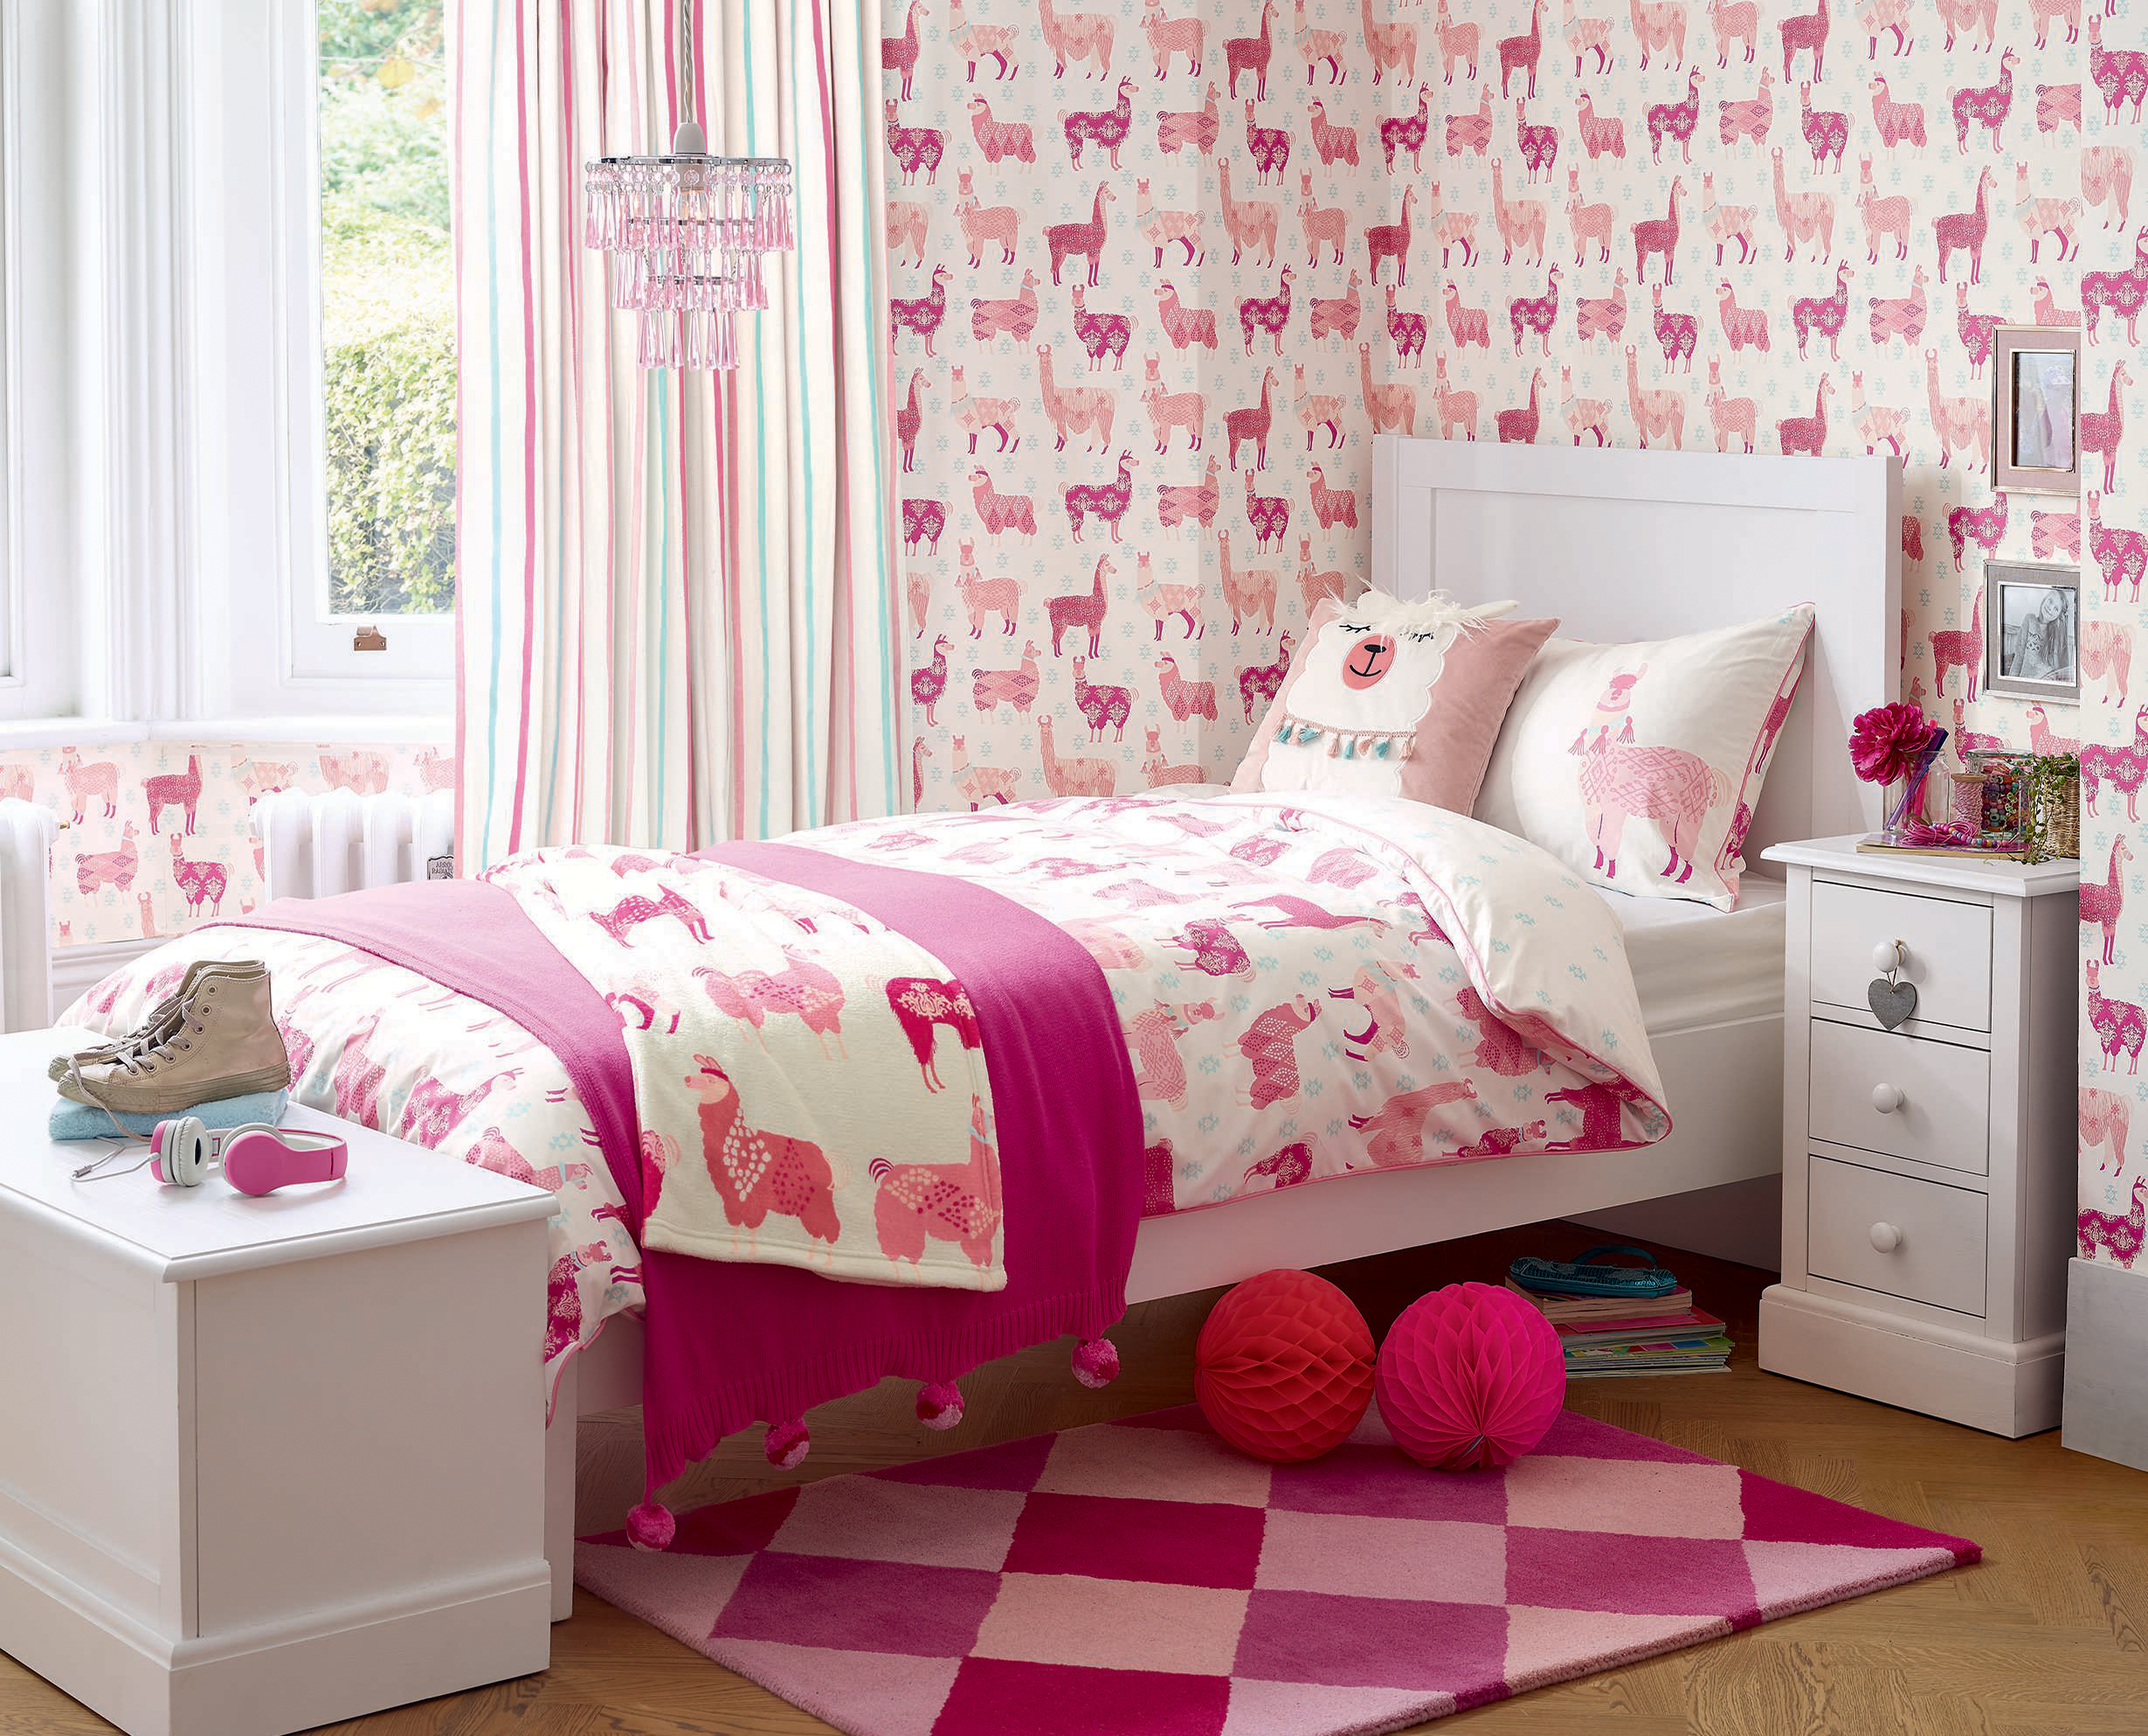 Children's Bedroom Design Ideas and Inspiration